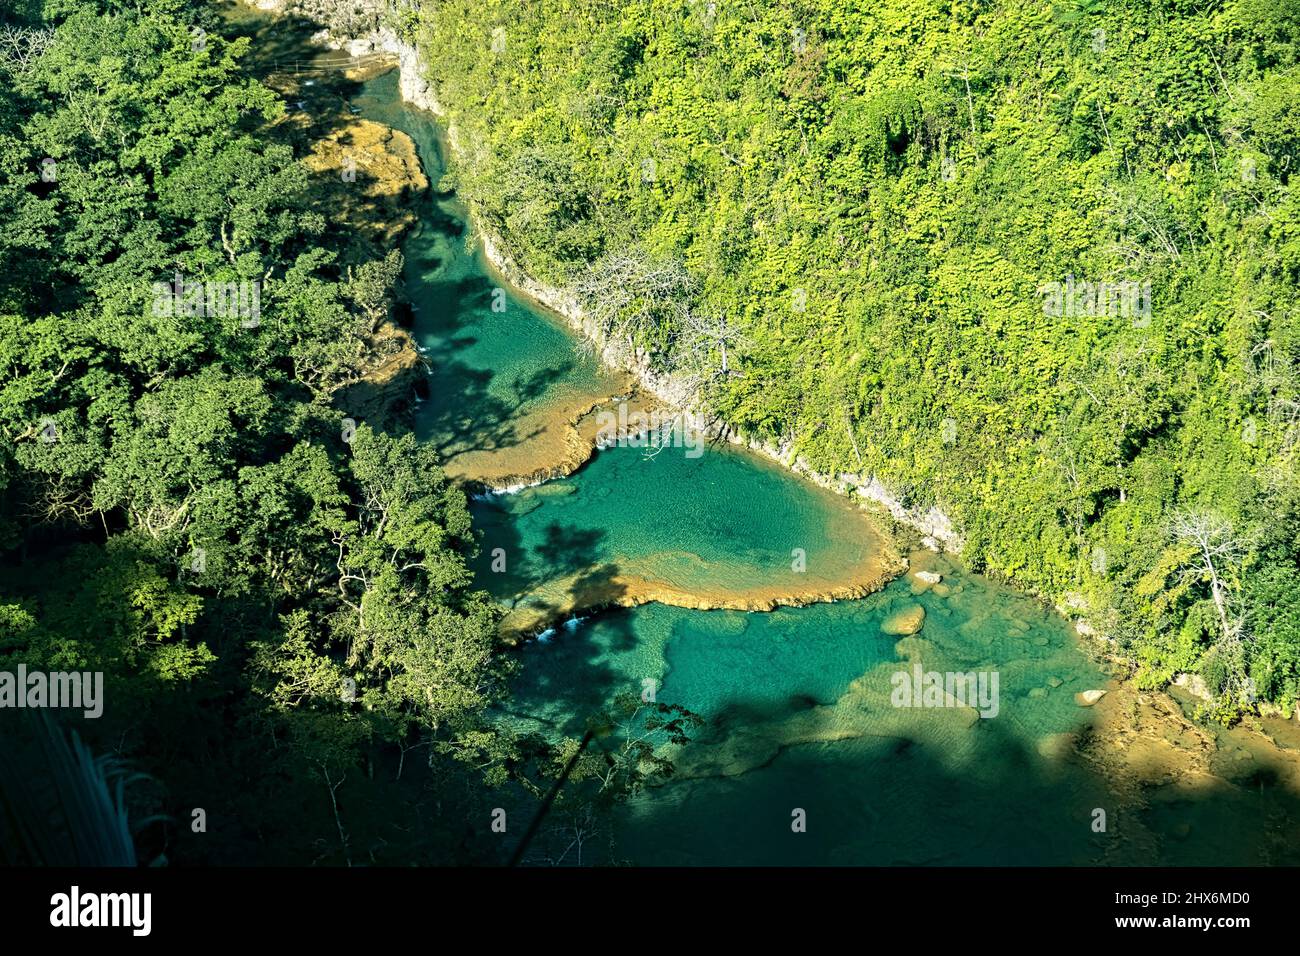 The amazing turquoise pools of Semuc Champey, Rio Cabohon, Lanquin, Alta Verapaz, Guatemala Stock Photo